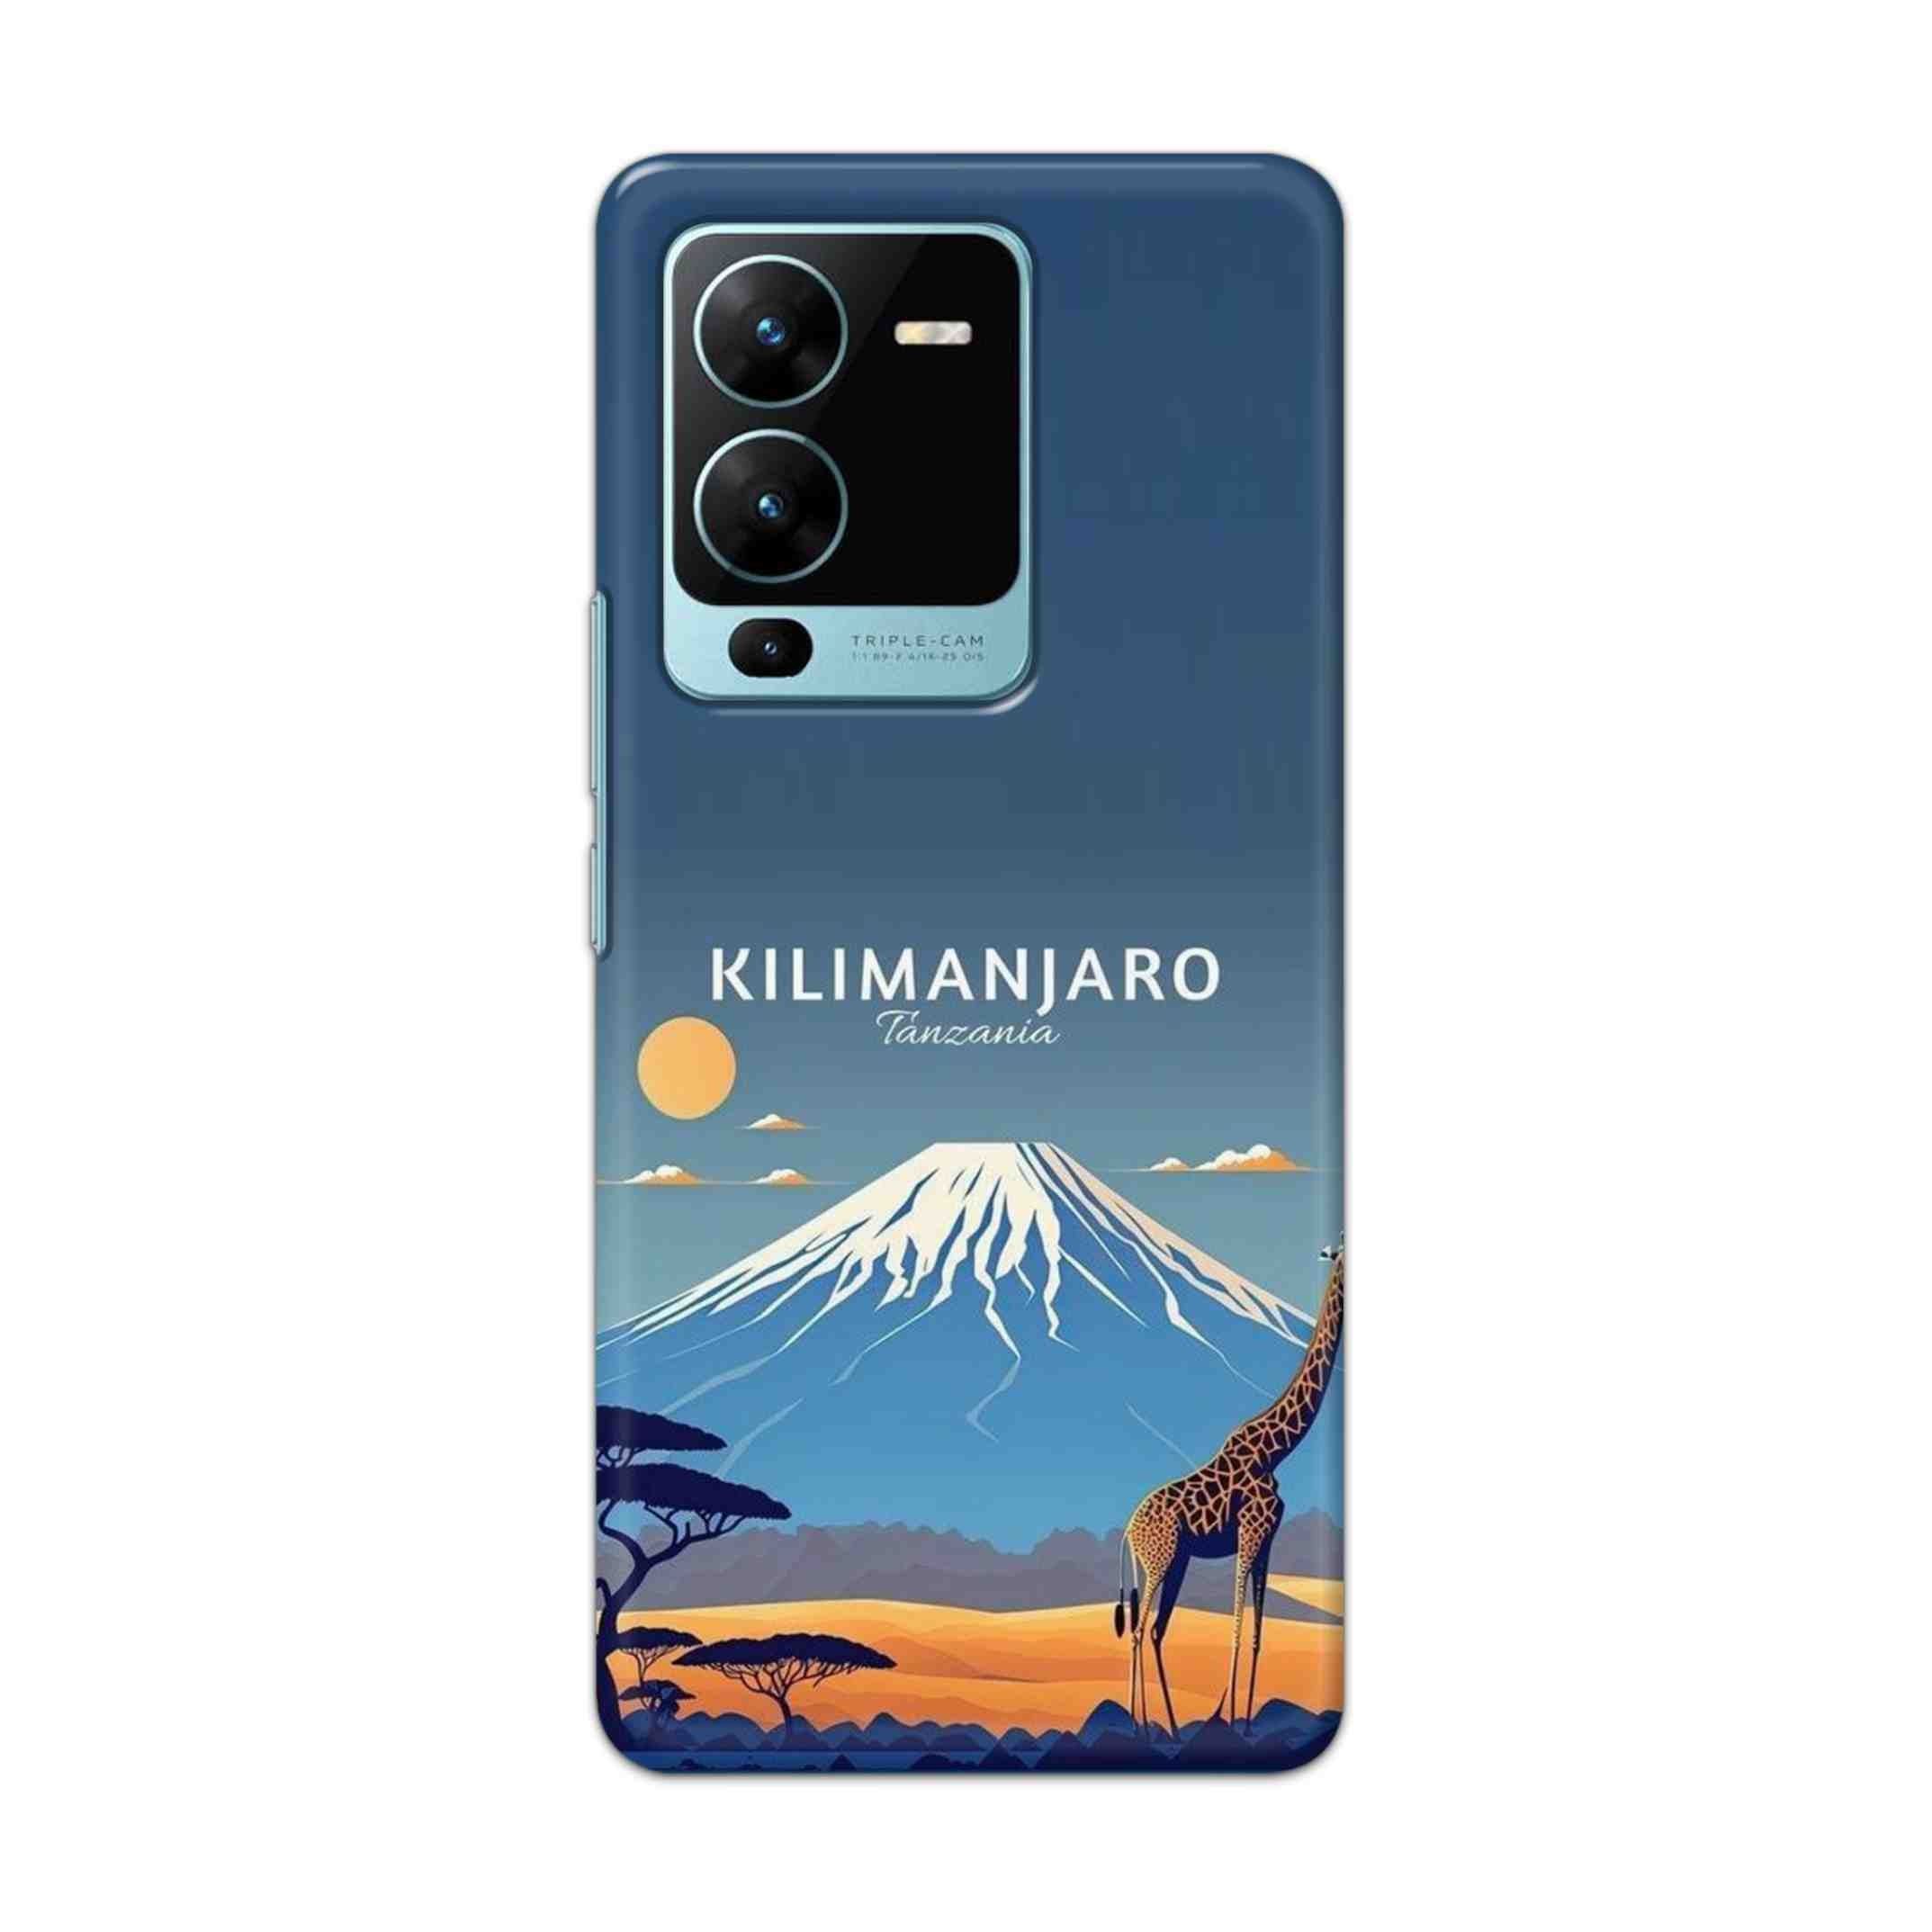 Buy Kilimanjaro Hard Back Mobile Phone Case Cover For Vivo V25 Pro Online